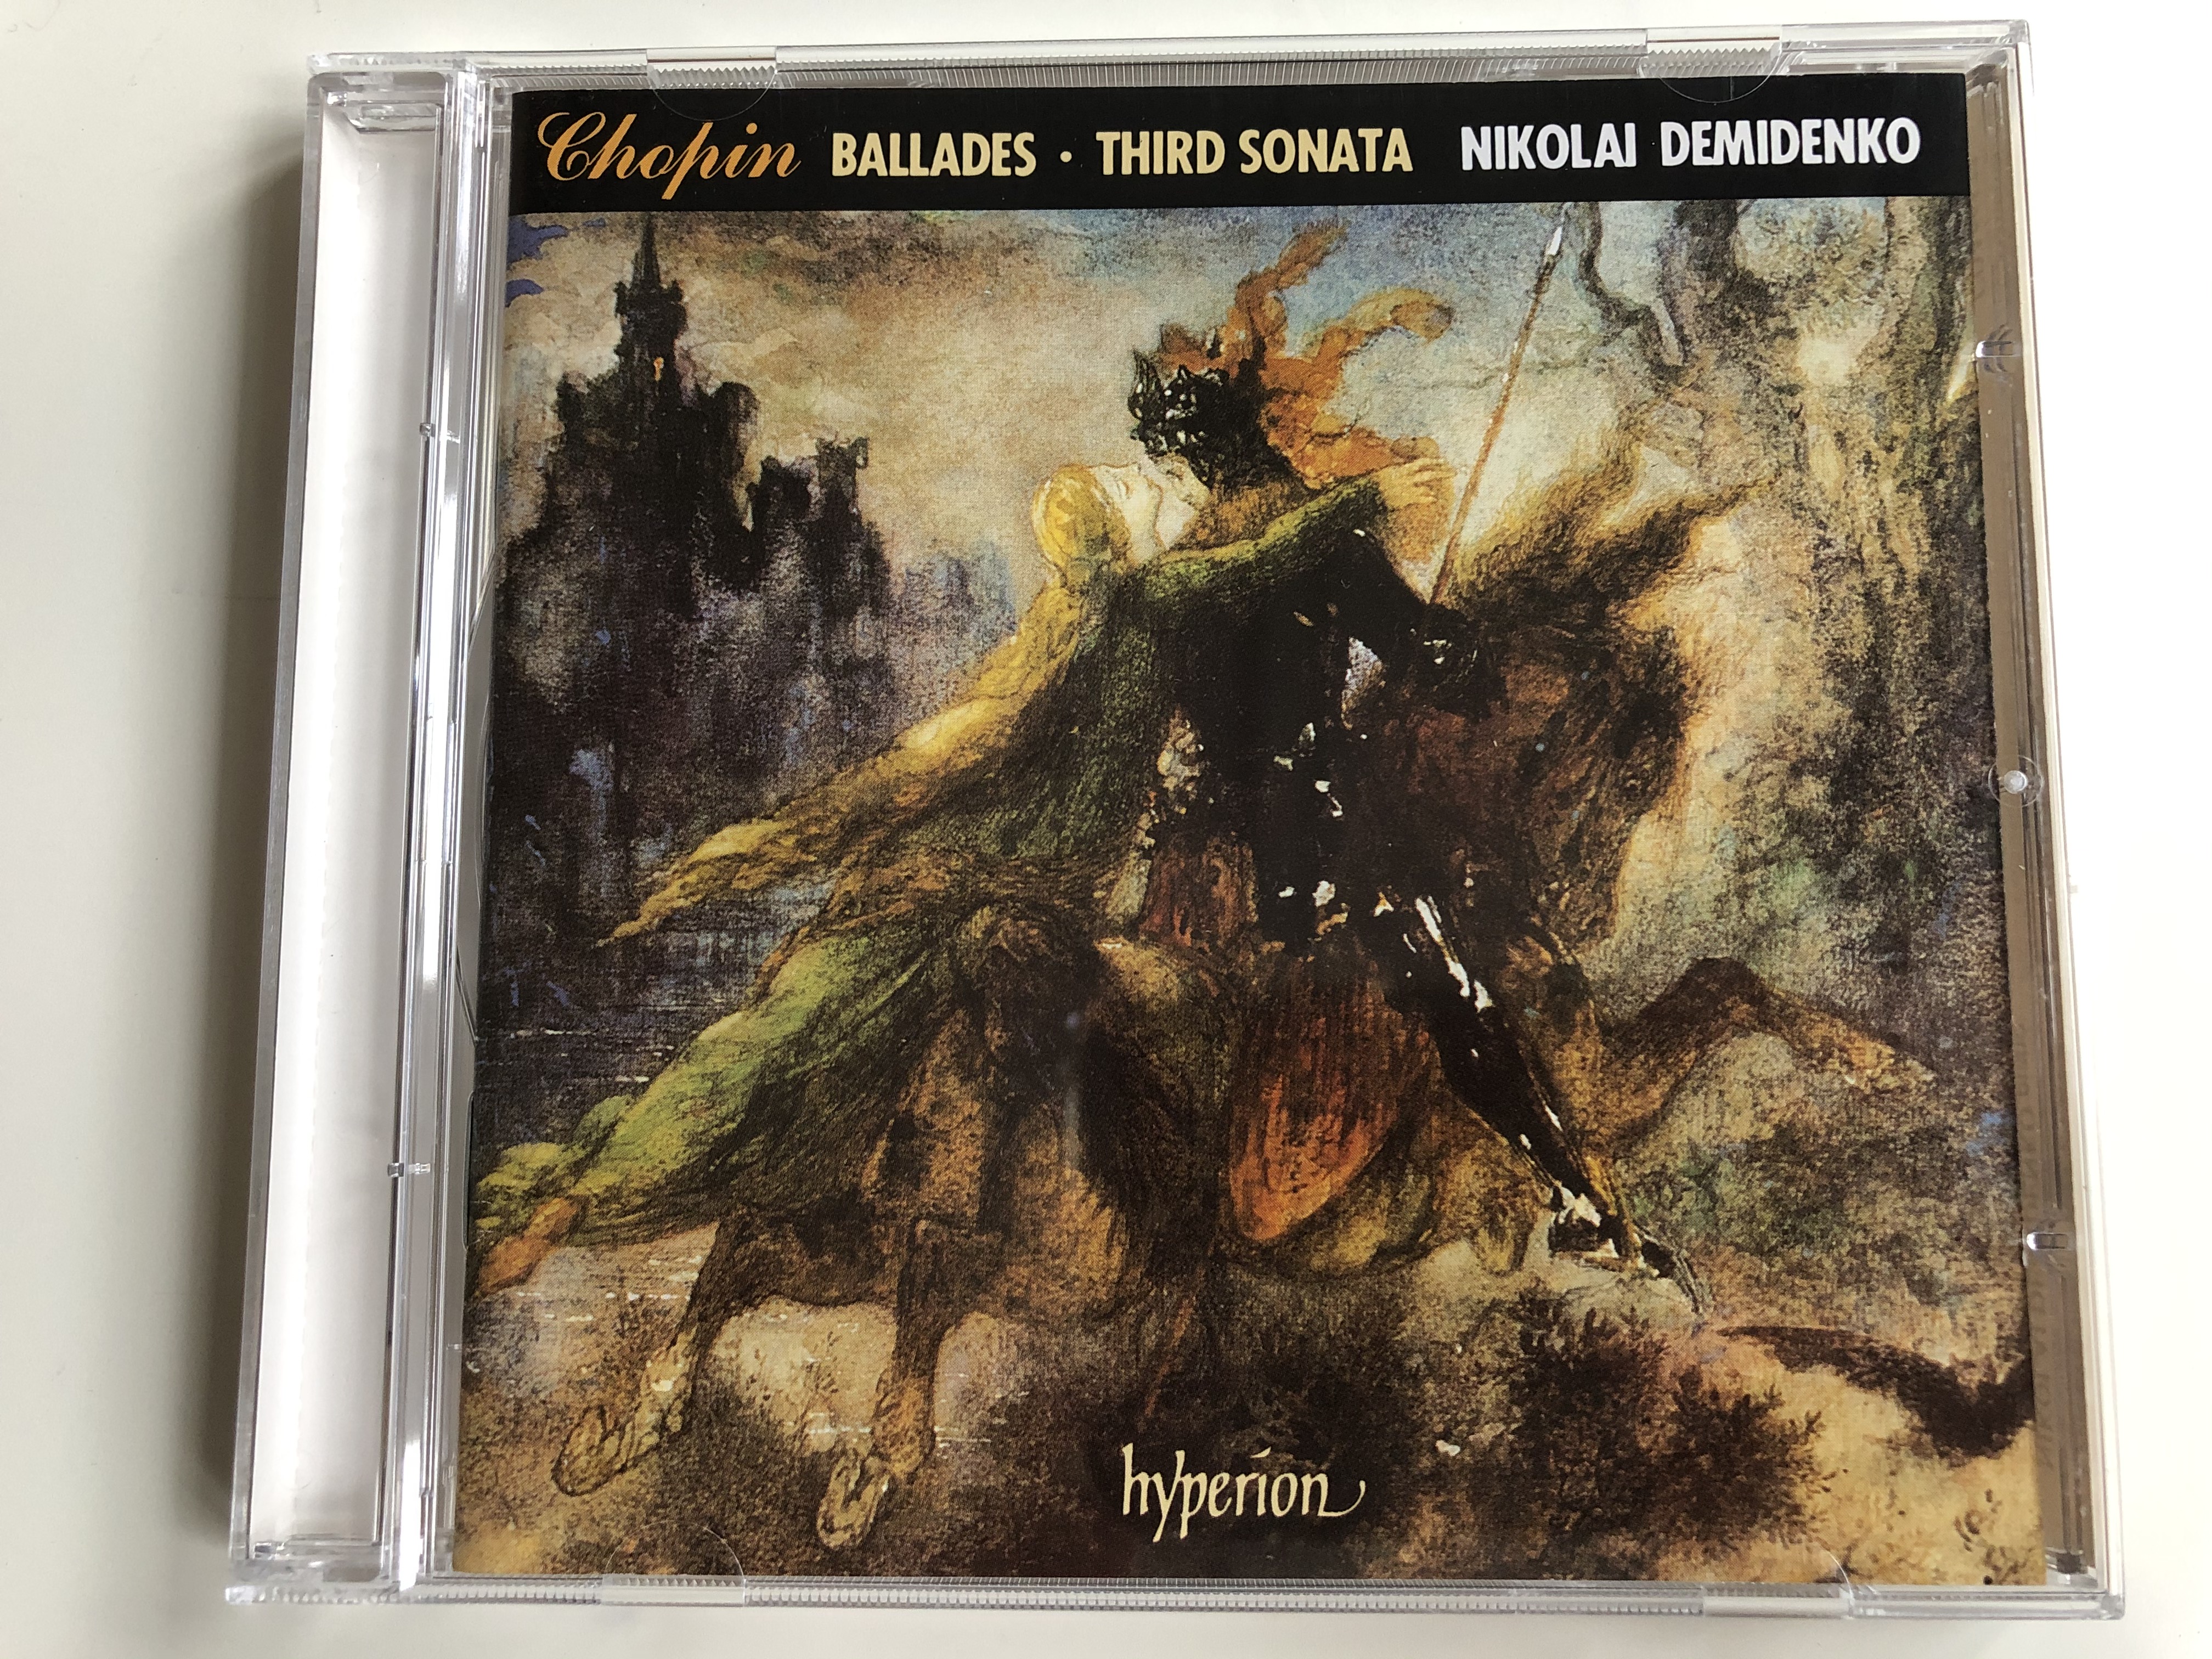 chopin-ballades-third-sonata-nikolai-demidenko-hyperion-audio-cd-1993-stereo-cda66577-1-.jpg